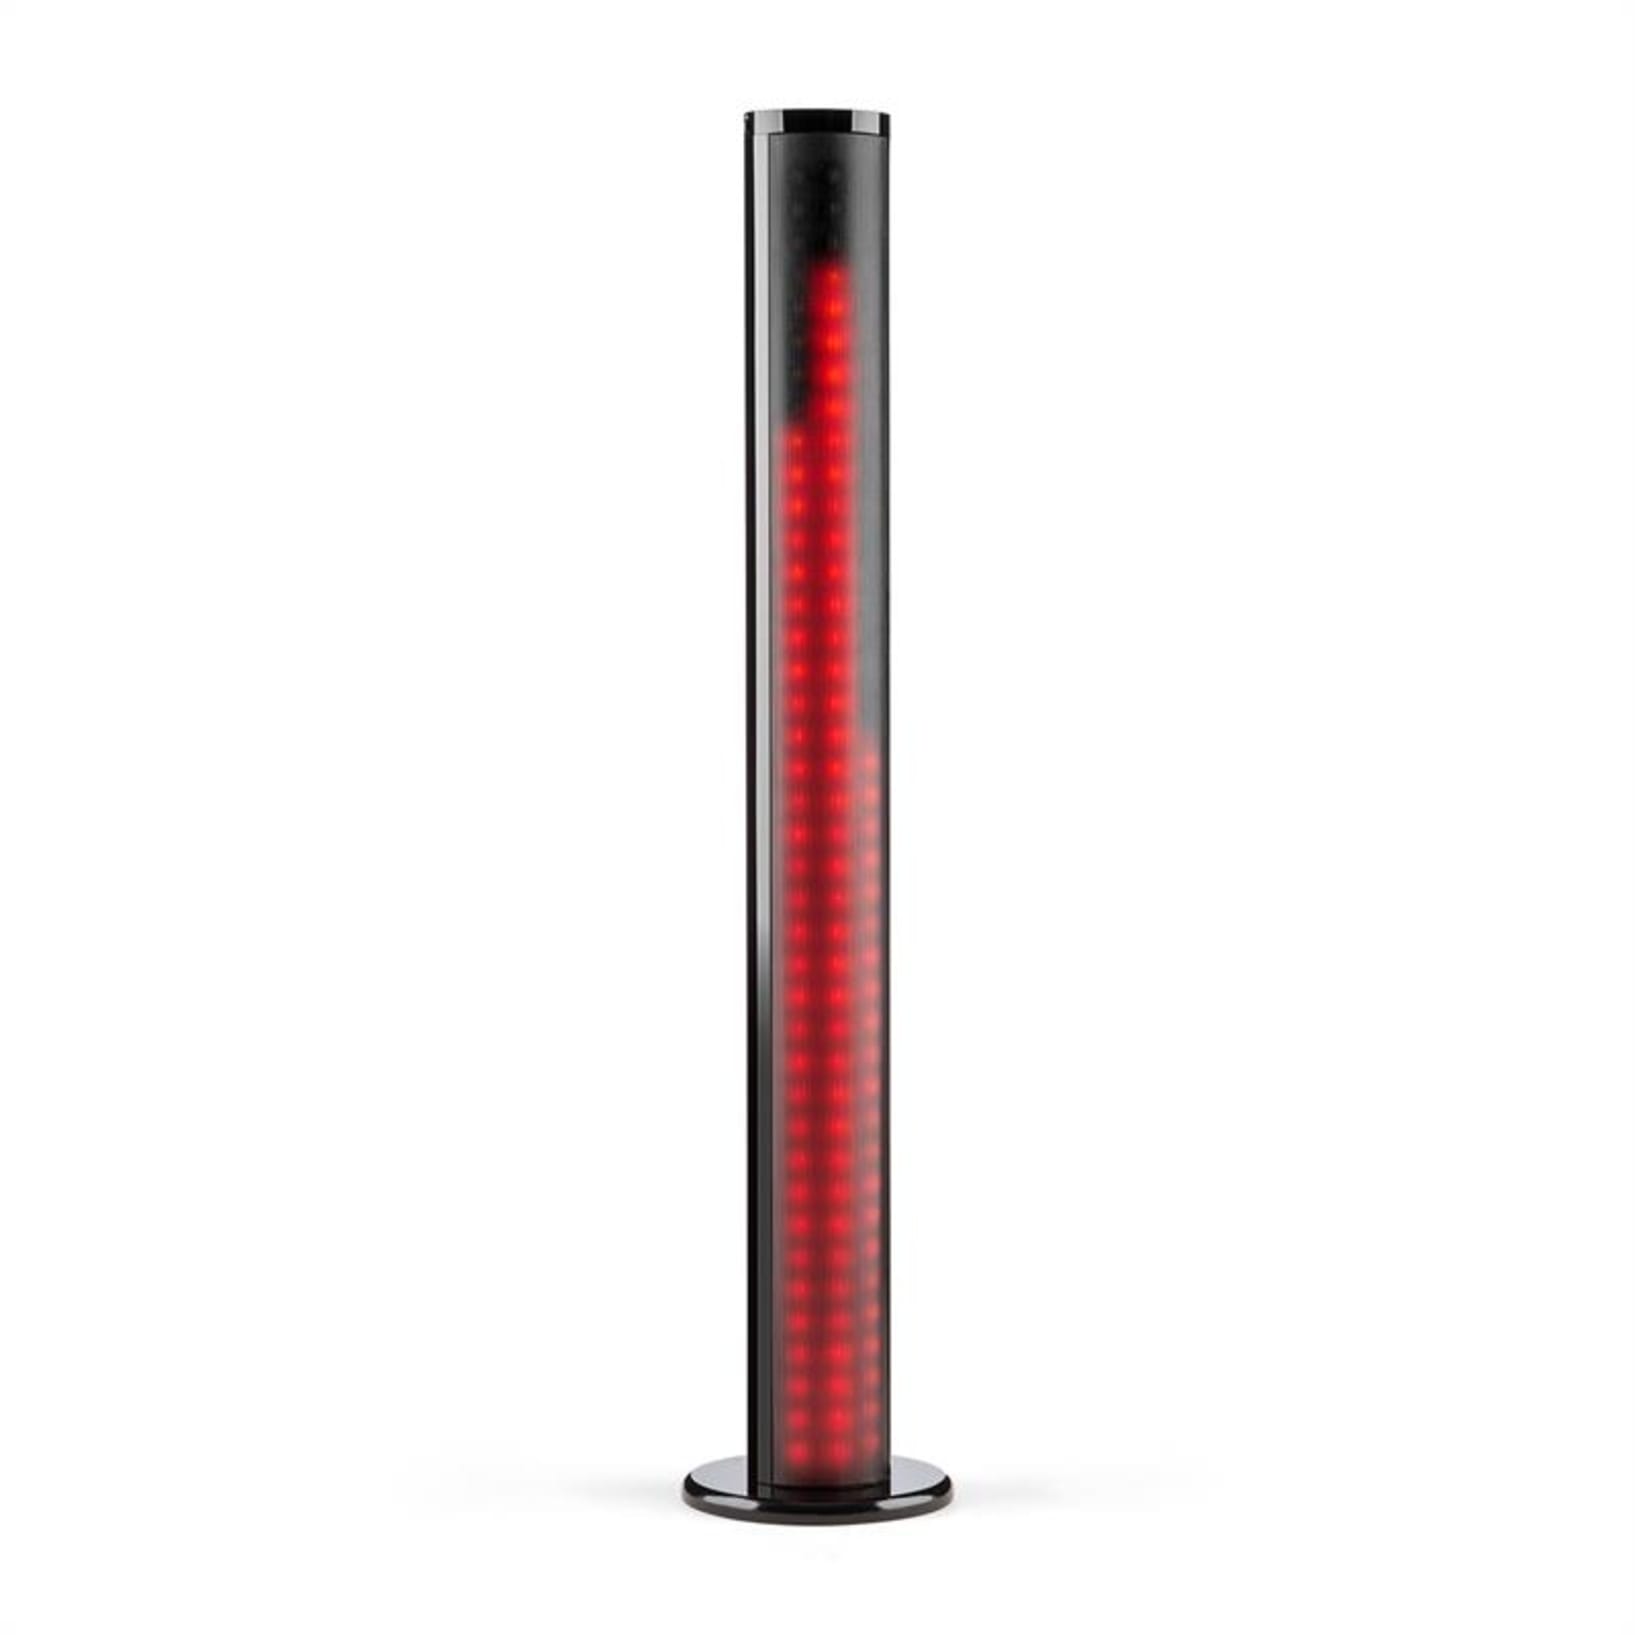 Absurd honing Arne auna Light Up Tower Speaker luidsprekerzuil 40 W bluetooth LED USB UKW  zwart Zwart